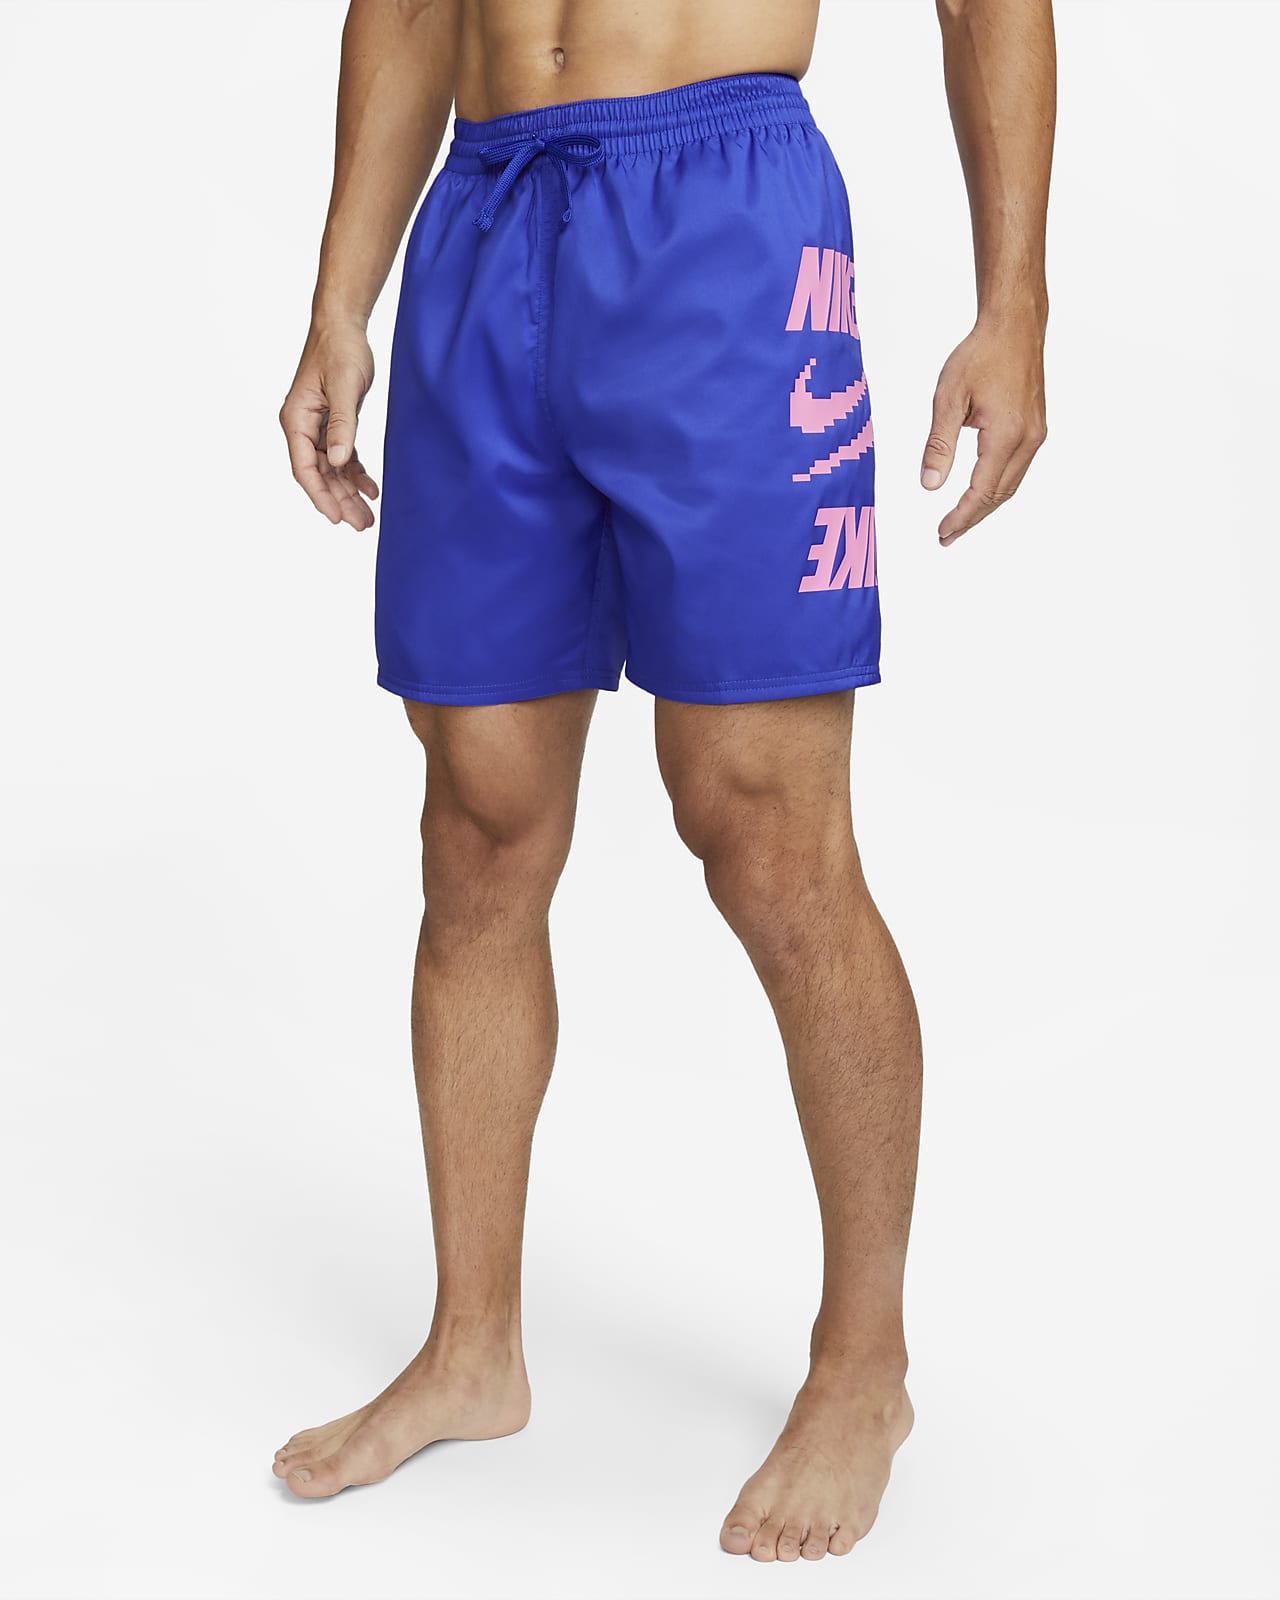 Eenvoud zondaar Uitputting Nike Men's 7" Volley Shorts. Nike.com